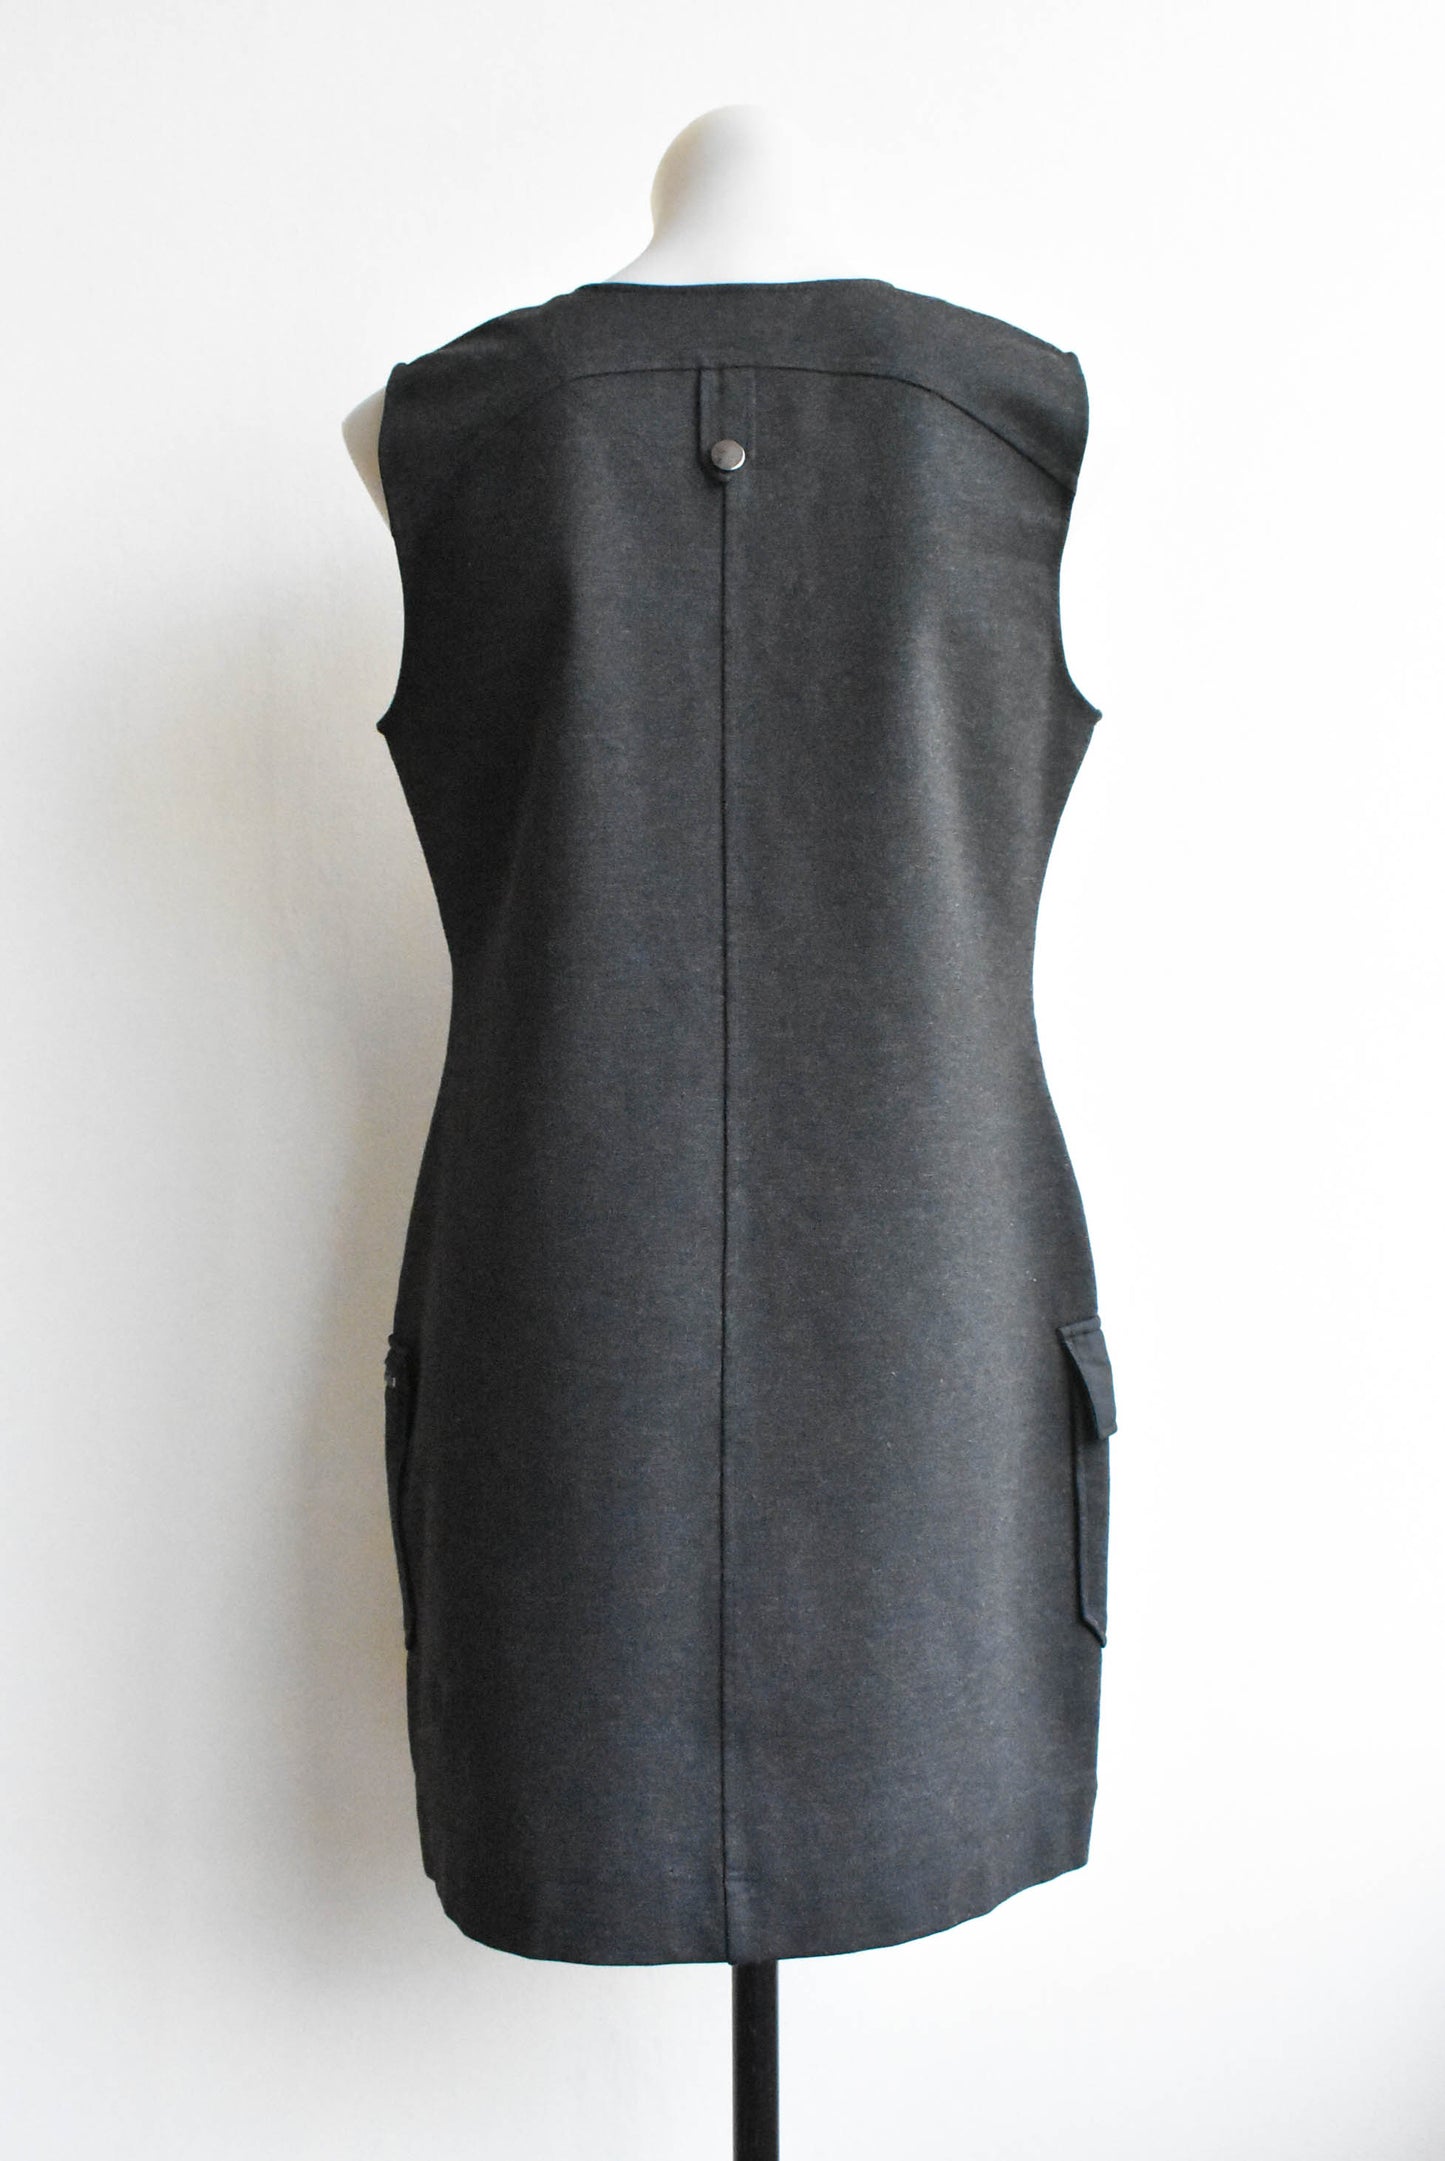 Vargo black sleeveless dress, size 14